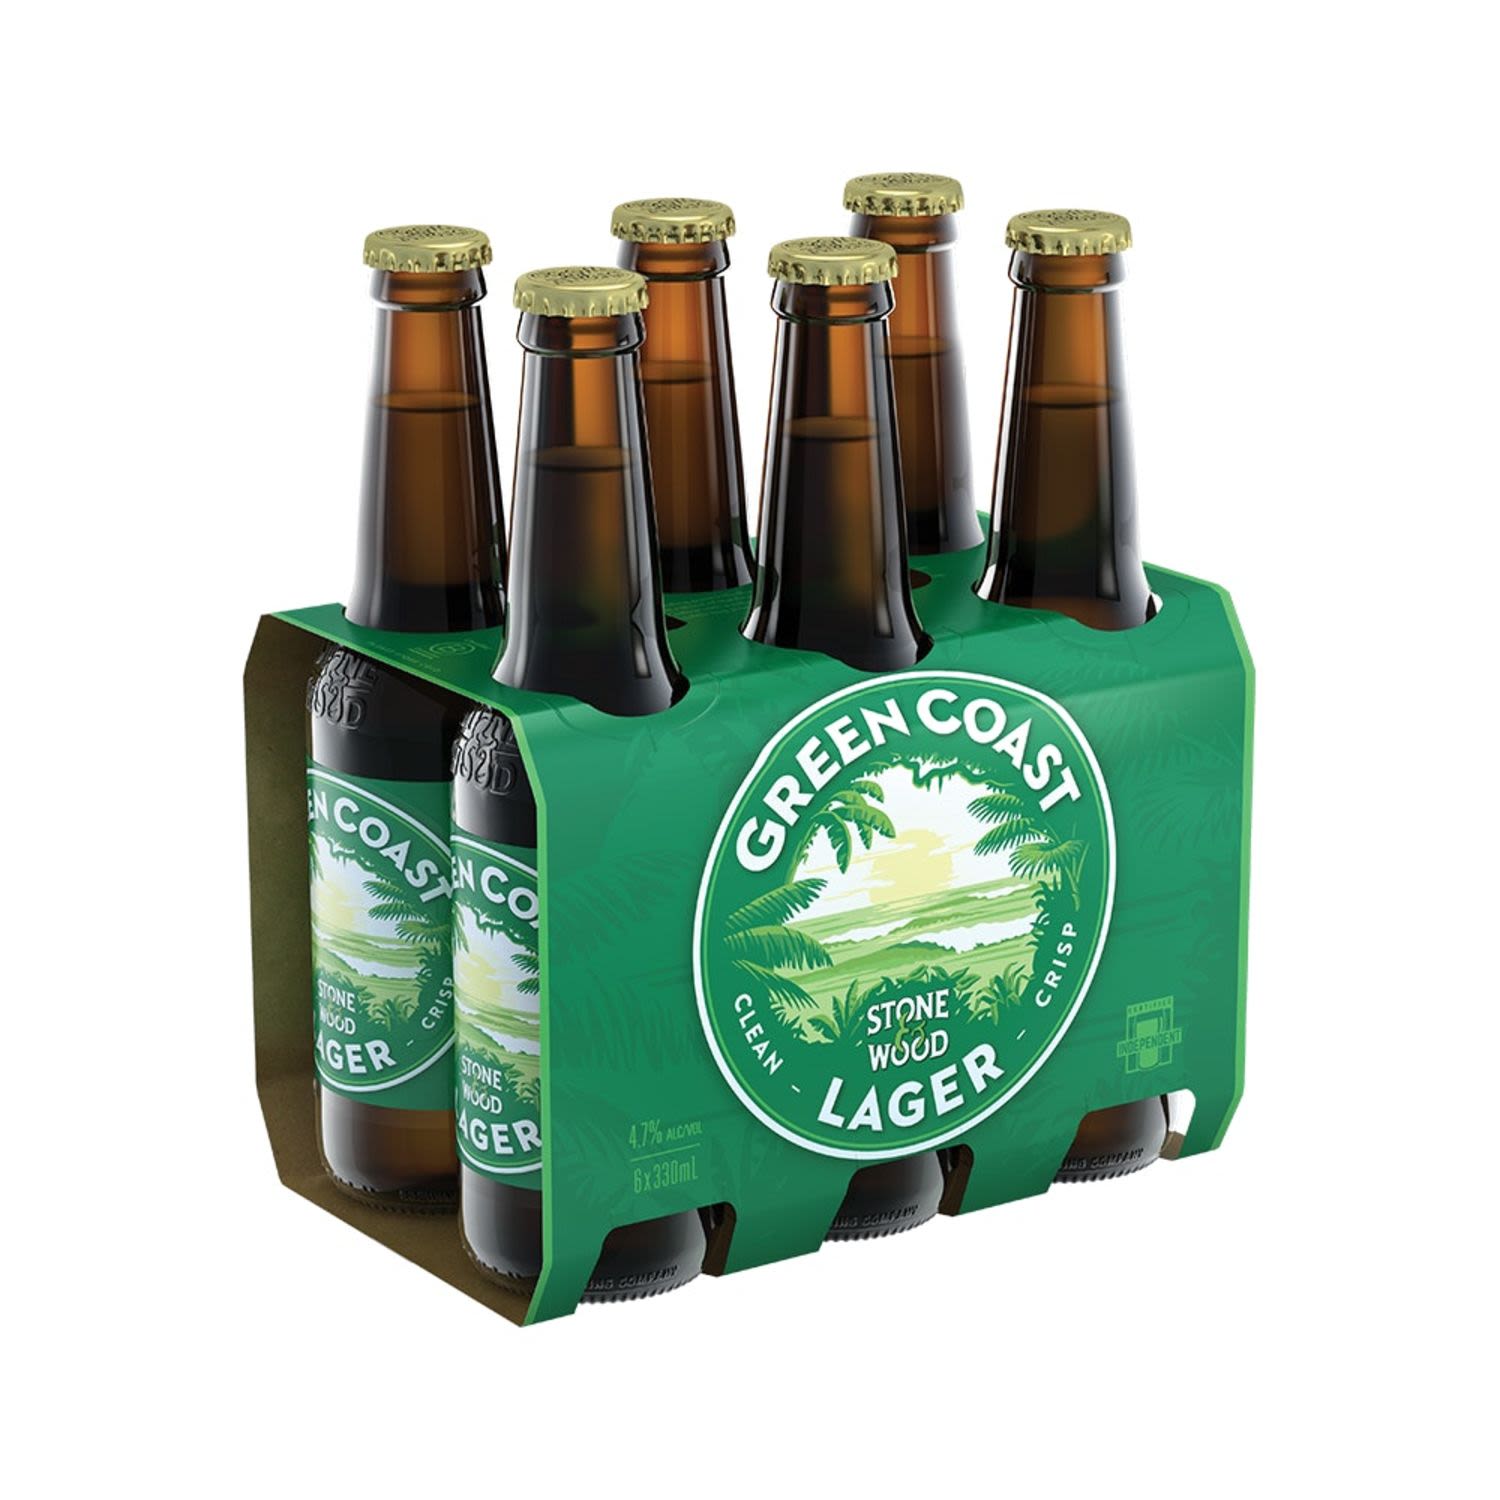 Stone & Wood Green Coast Lager Bottle 330mL 6 Pack